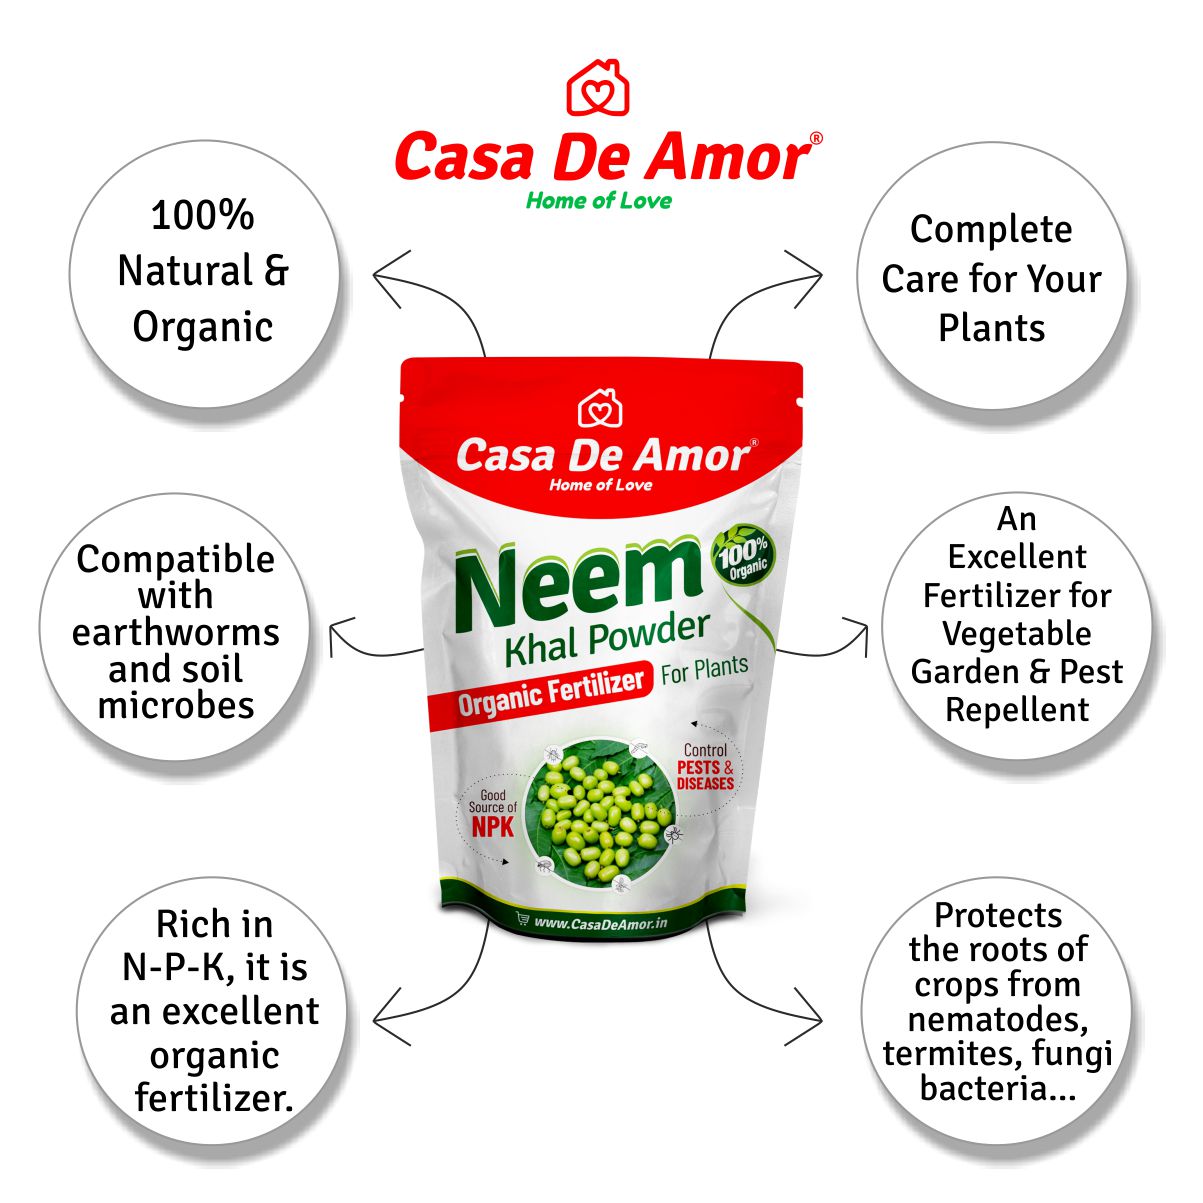 Casa De Amor Neem Khal Powder (900 gm) + Mustard Oil Cake Powder (900 gm) + Karanj Powder (900 gm)- Combo Pack (Total 2700 gm)